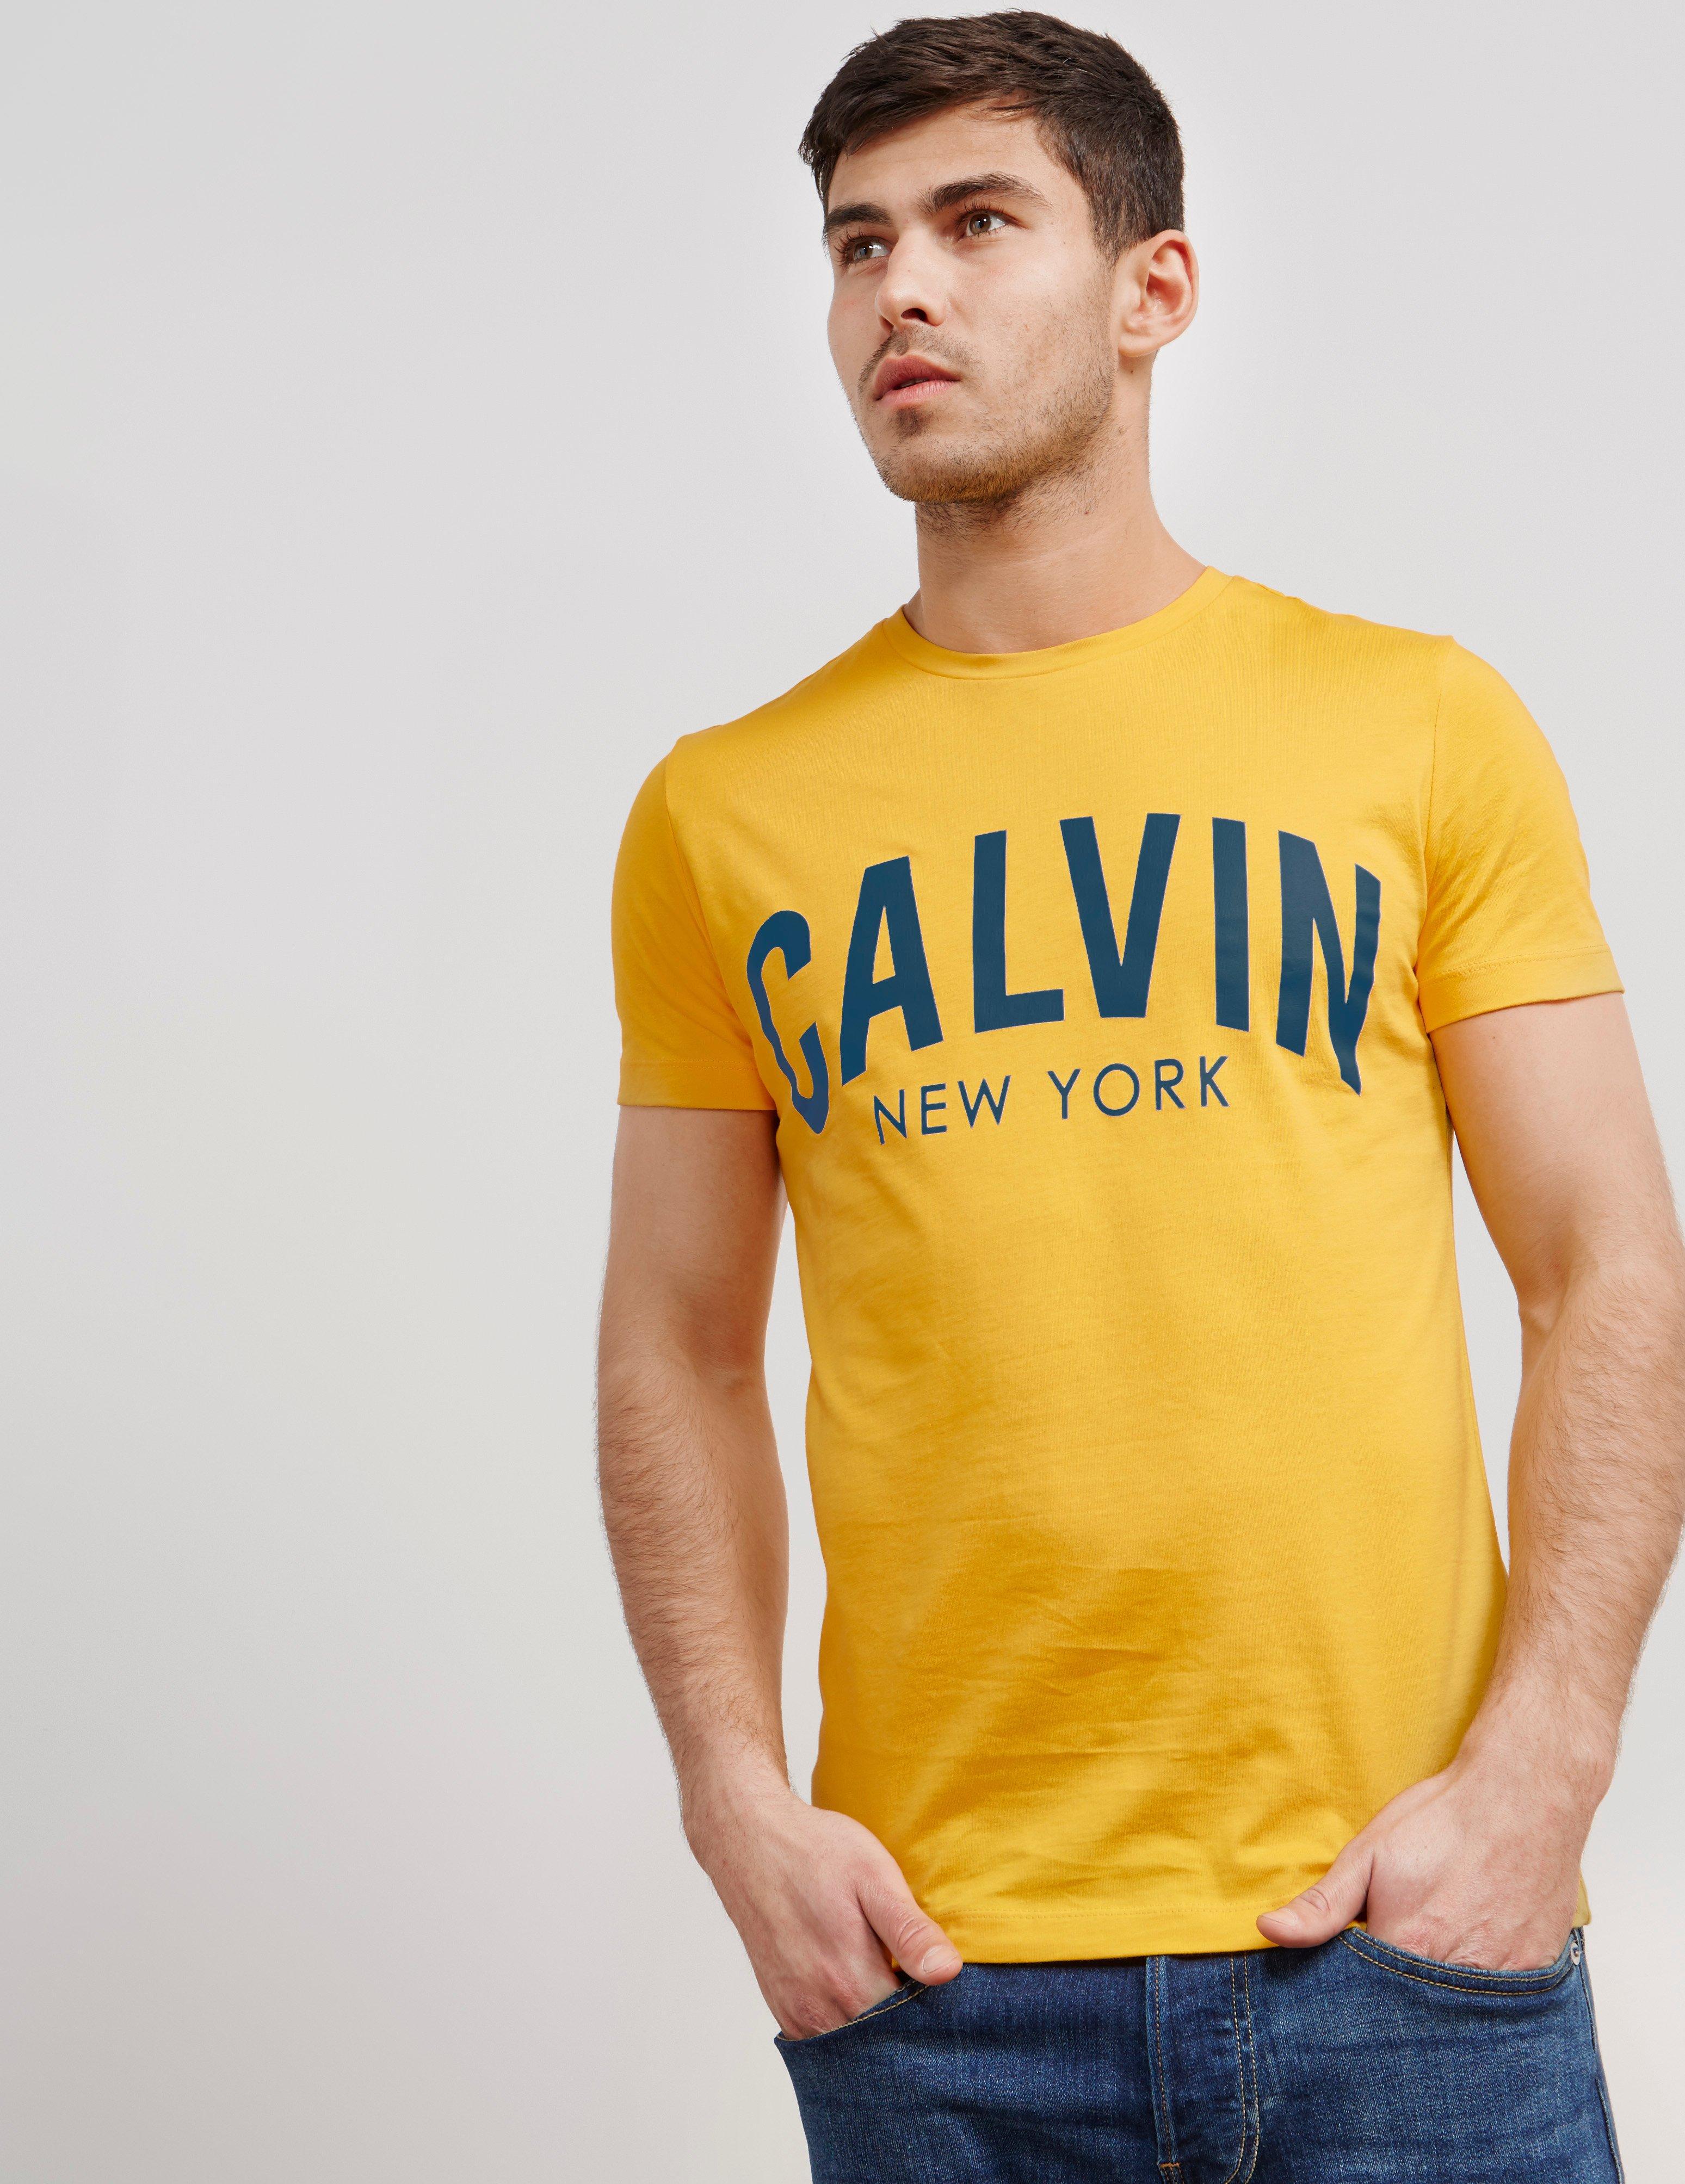 calvin klein yellow shirt